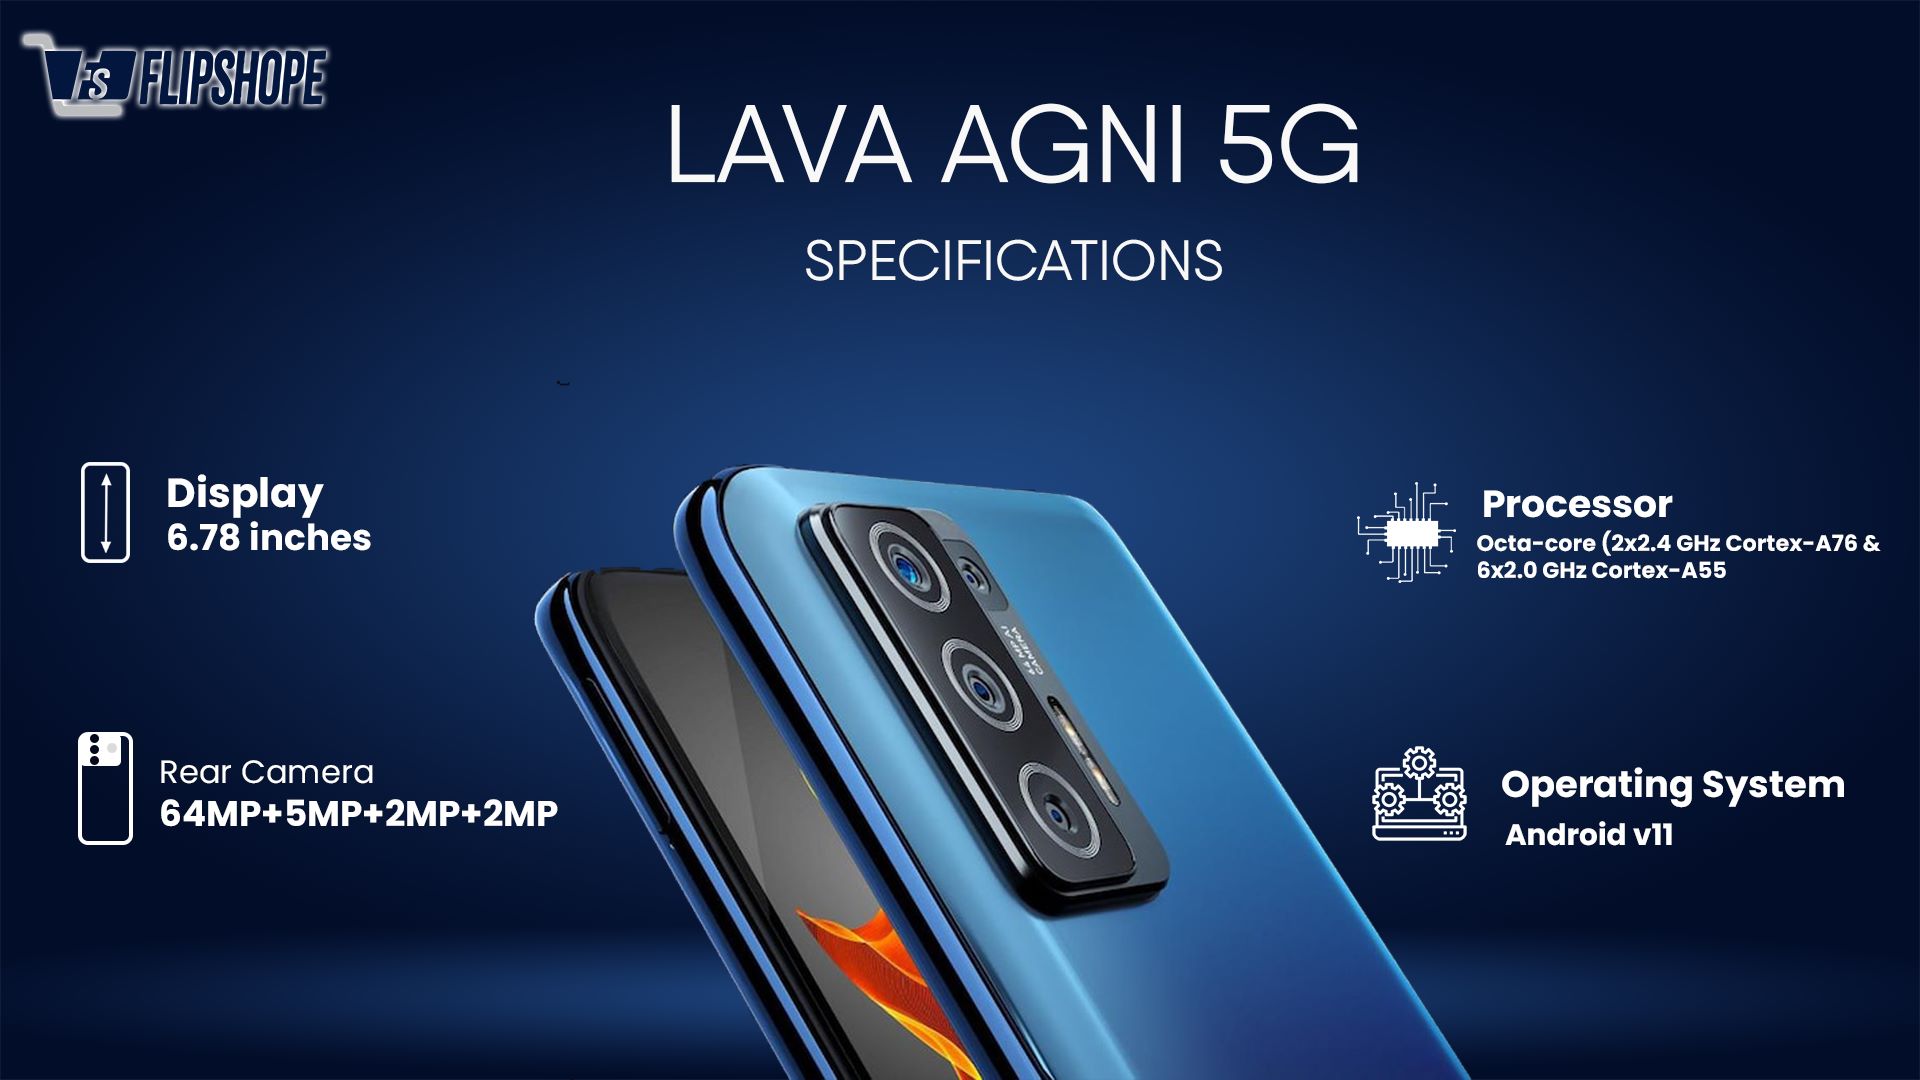 Lava Agni 5G Specifications